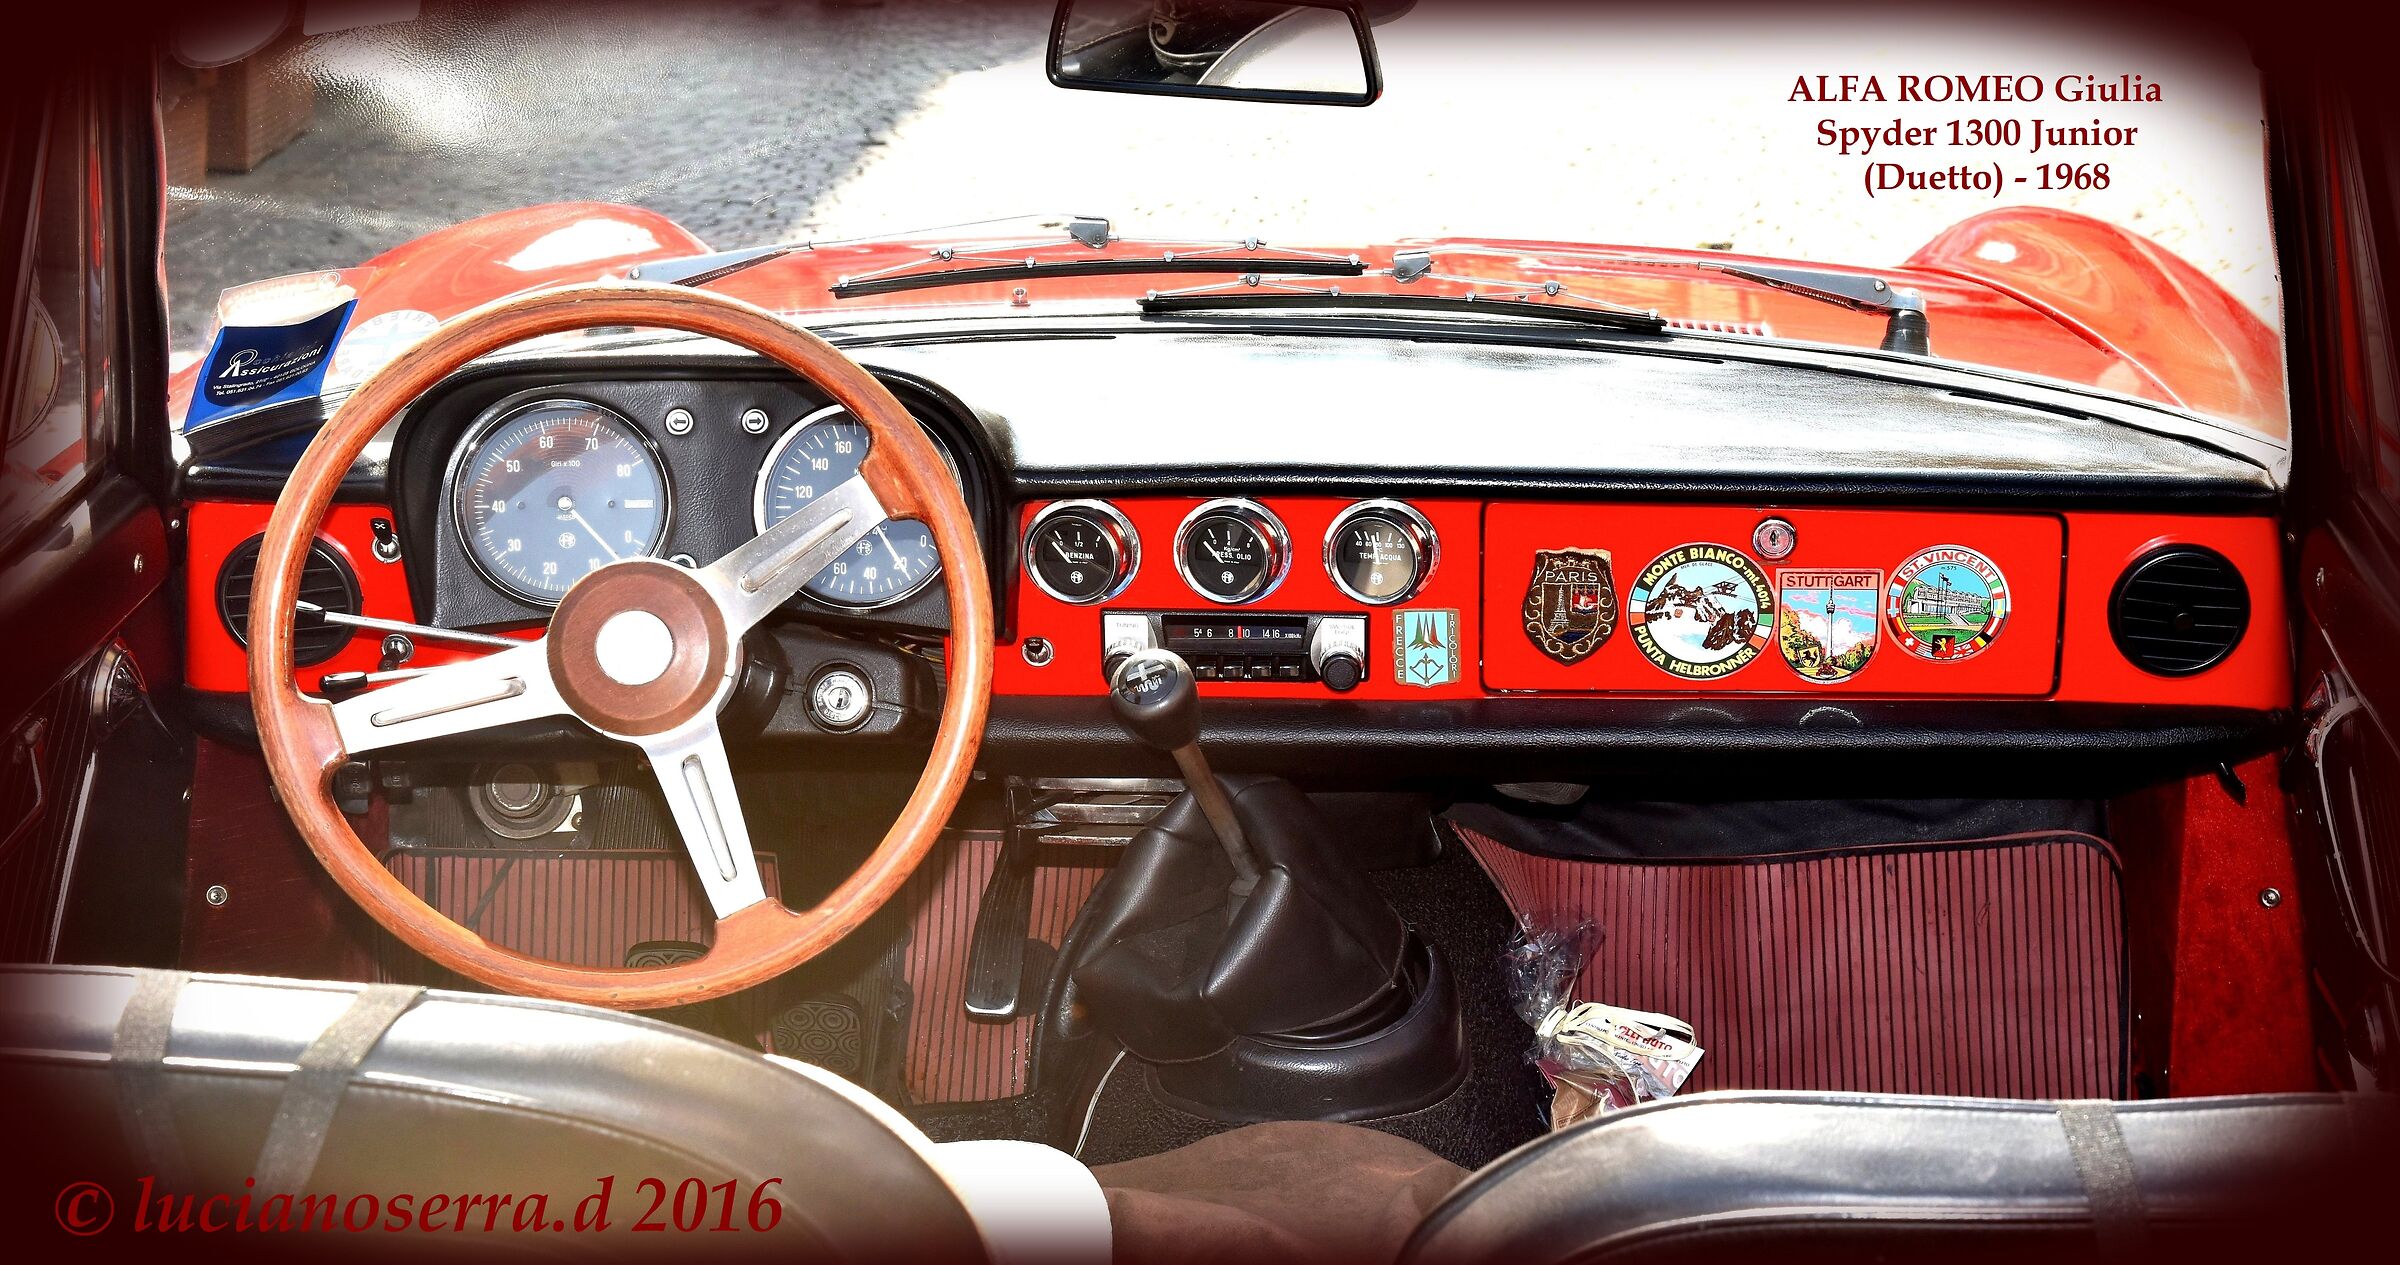 Alfa Romeo Giulia Spyder 1300 Junior "Duetto" - 1968...